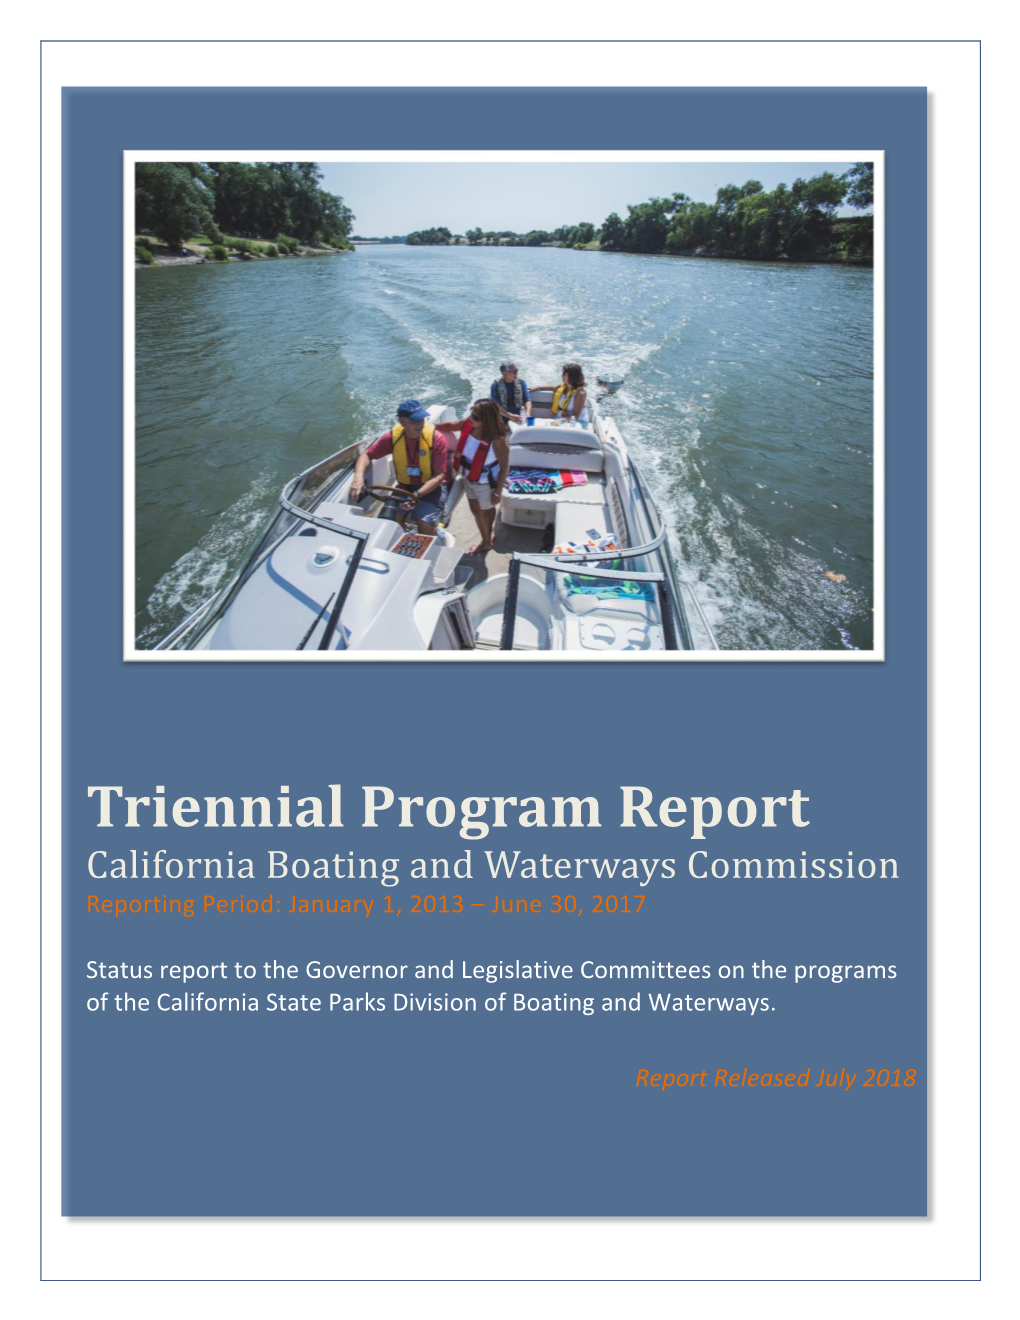 2013-2017 Triennial Program Report